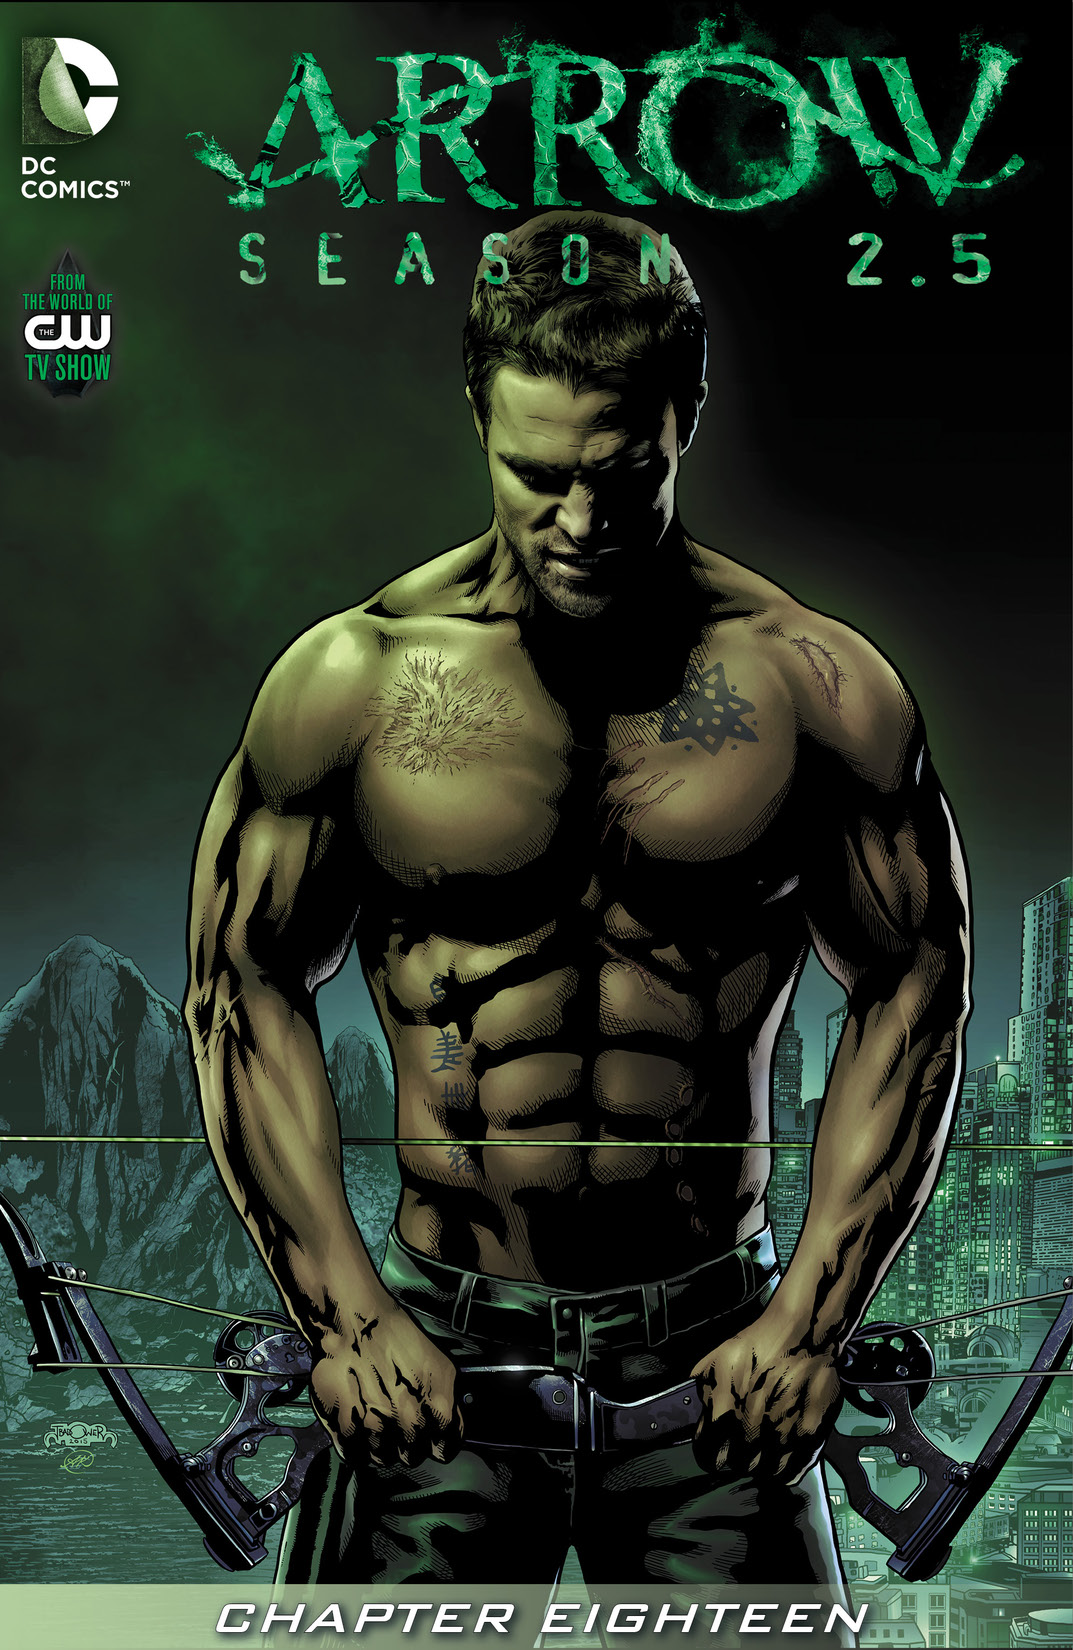 Arrow: Season 2.5 #18 preview images